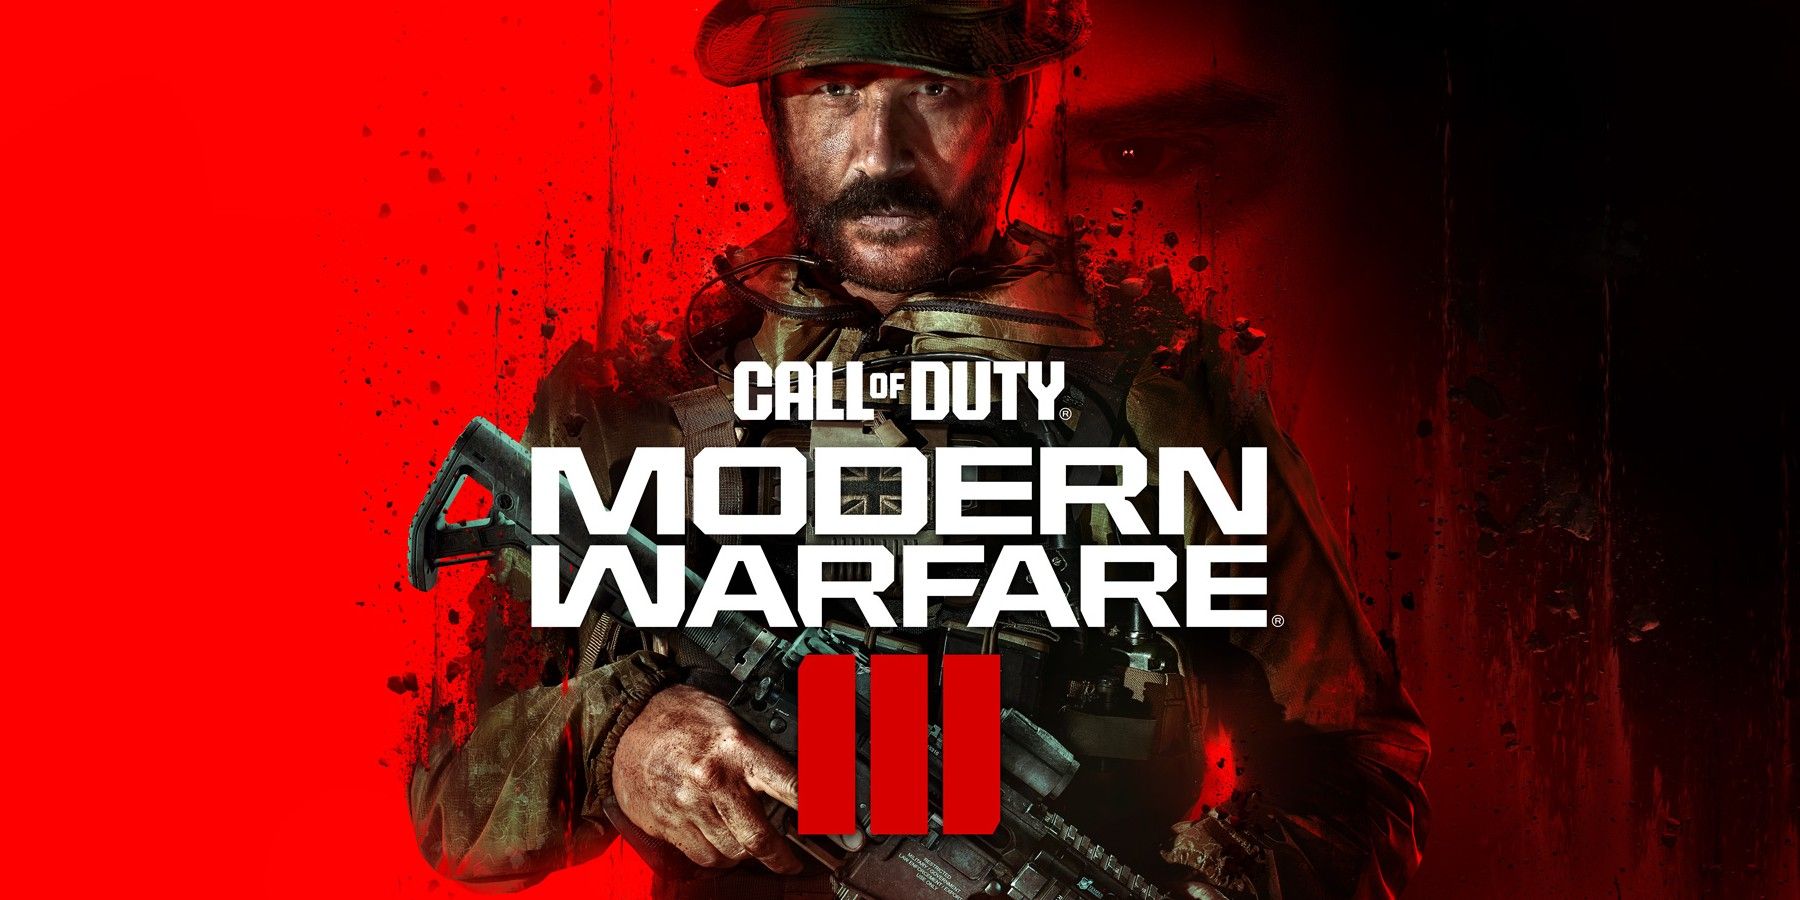 Call of Duty Modern Warfare 3 Open Beta Has Special Reward for Hitting